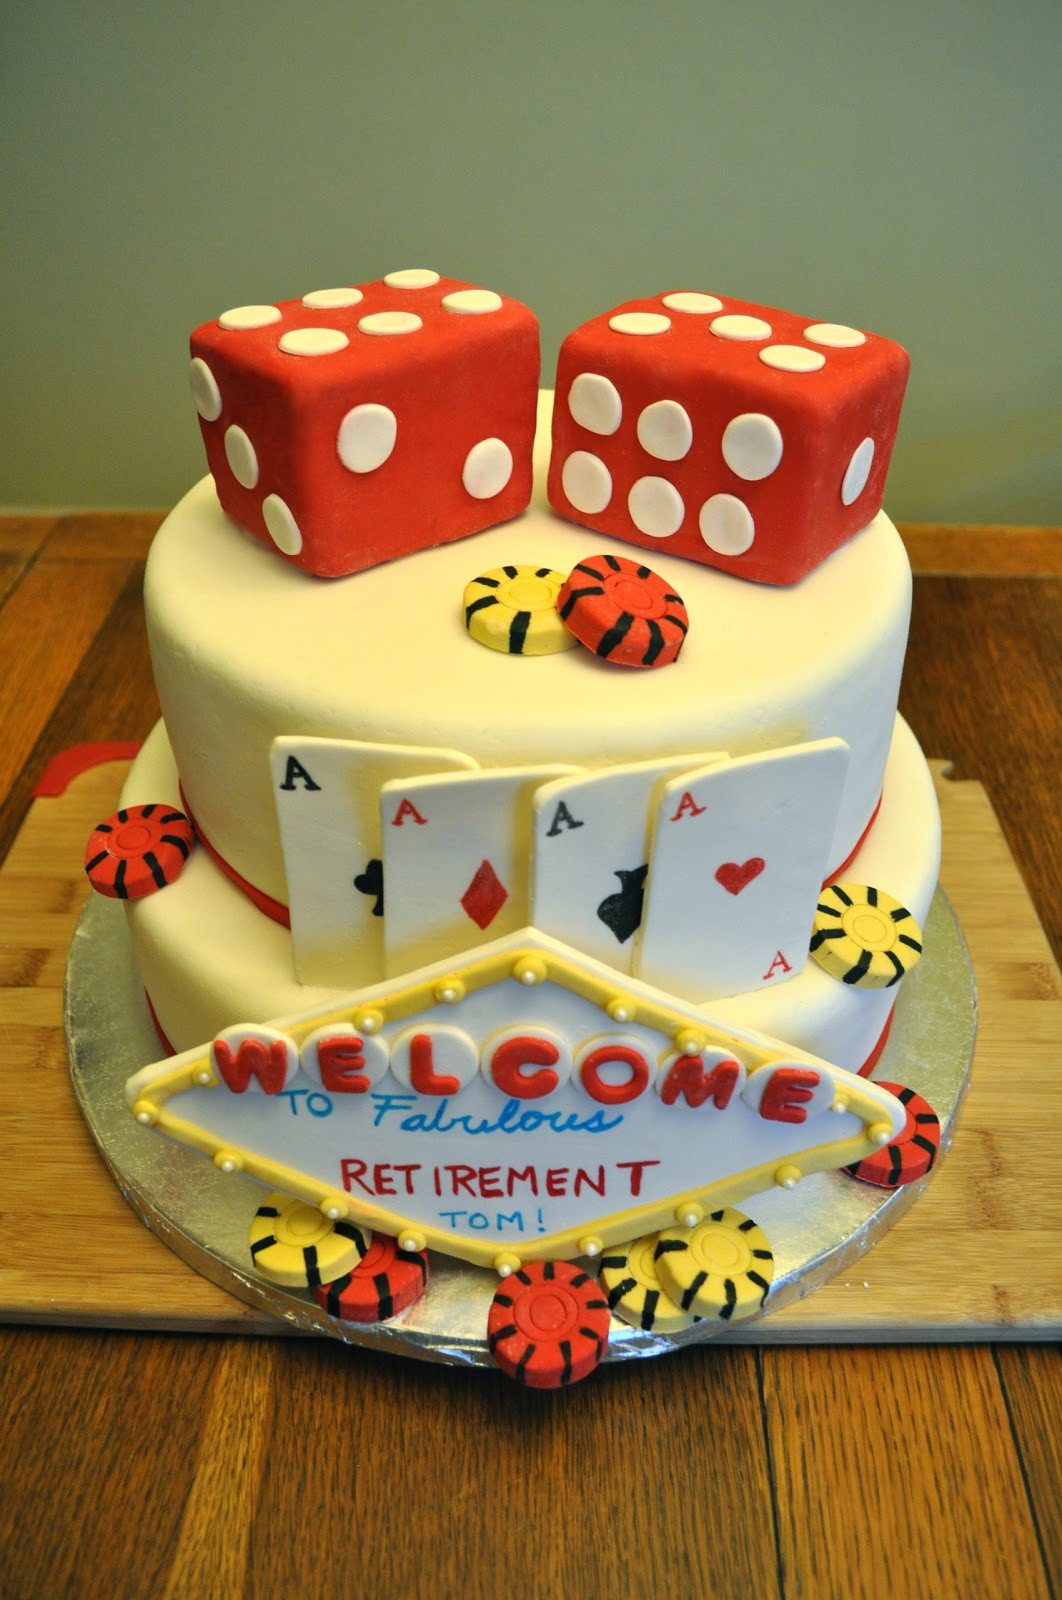 Retirement Party Cakes Ideas
 Cakes by Setia Retirement Cake Vegas Style